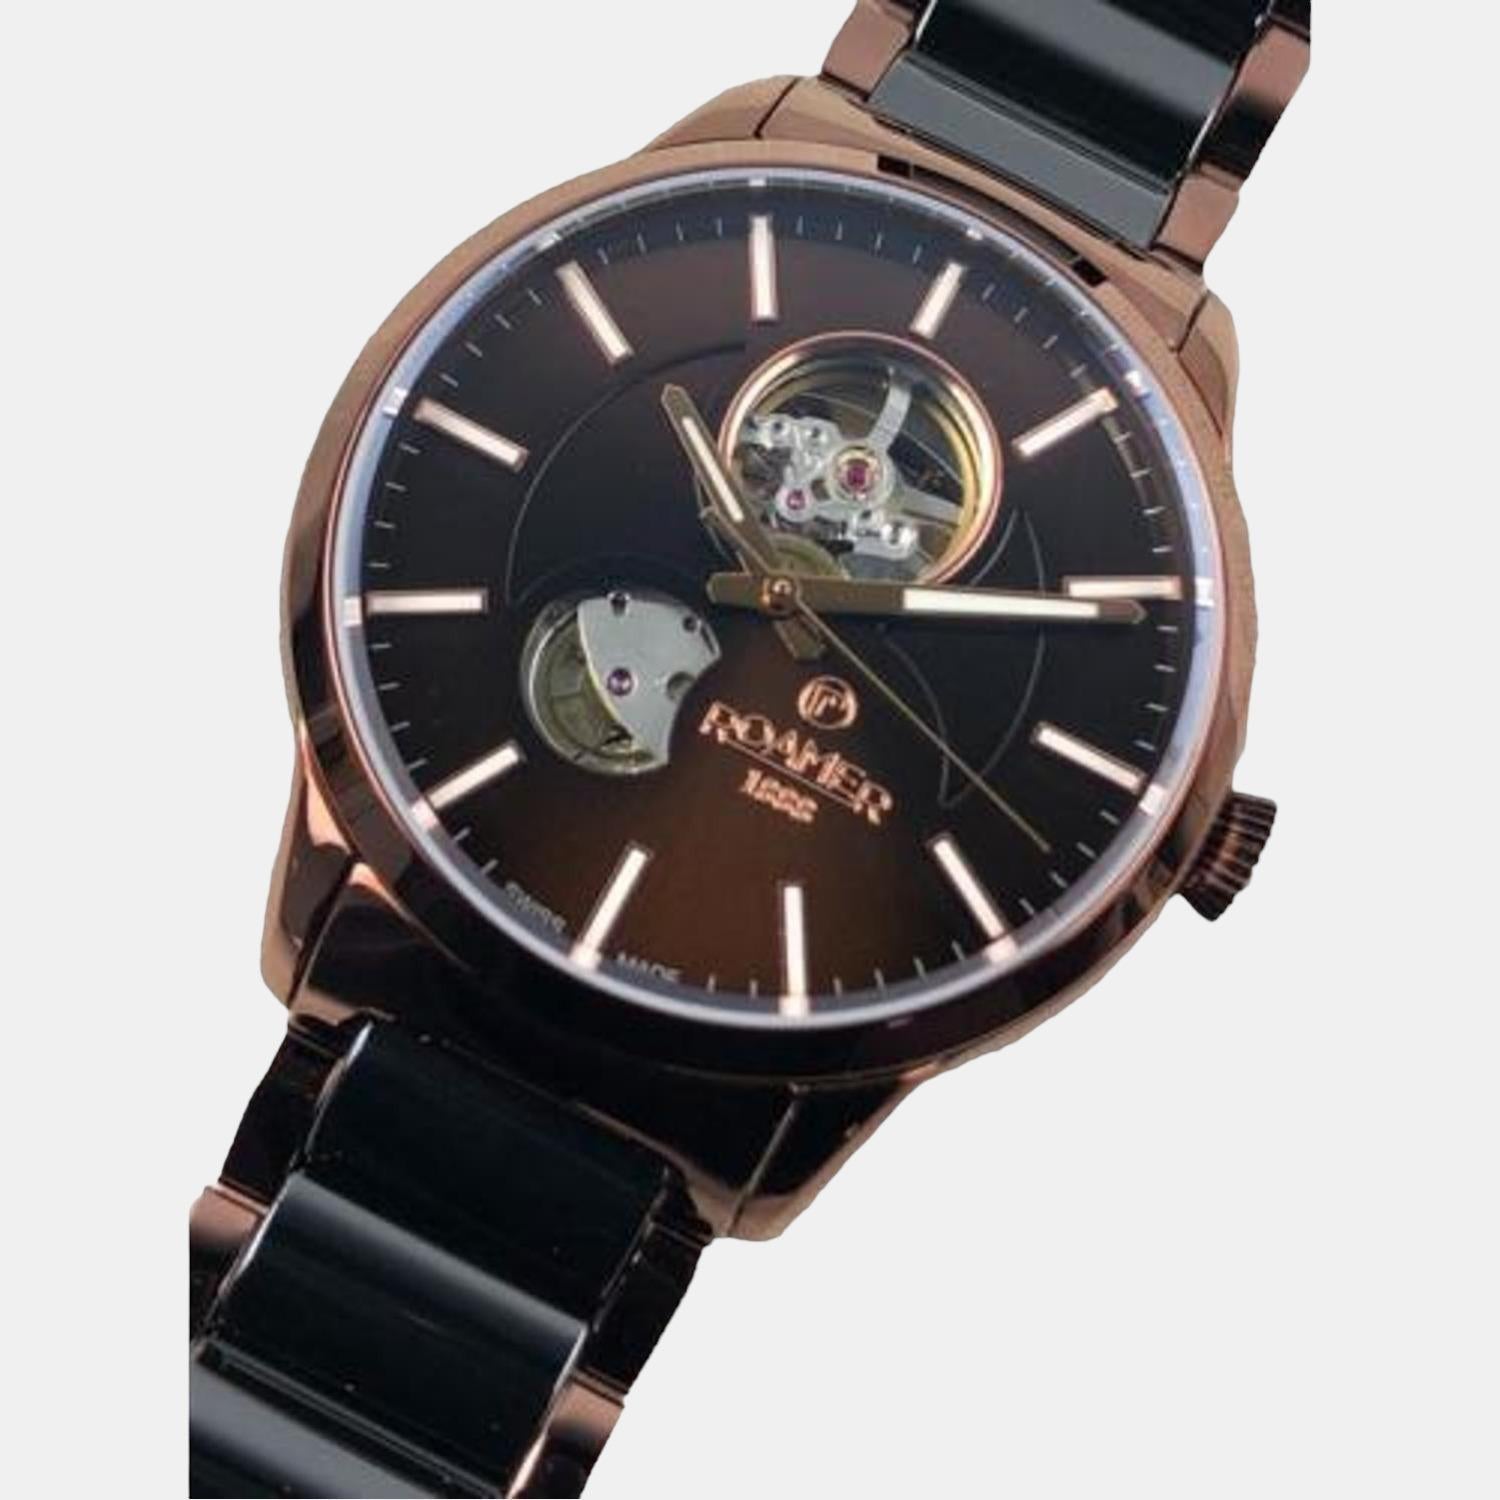 roamer-brass-brown-analog-male-watch-672661-40-65-60